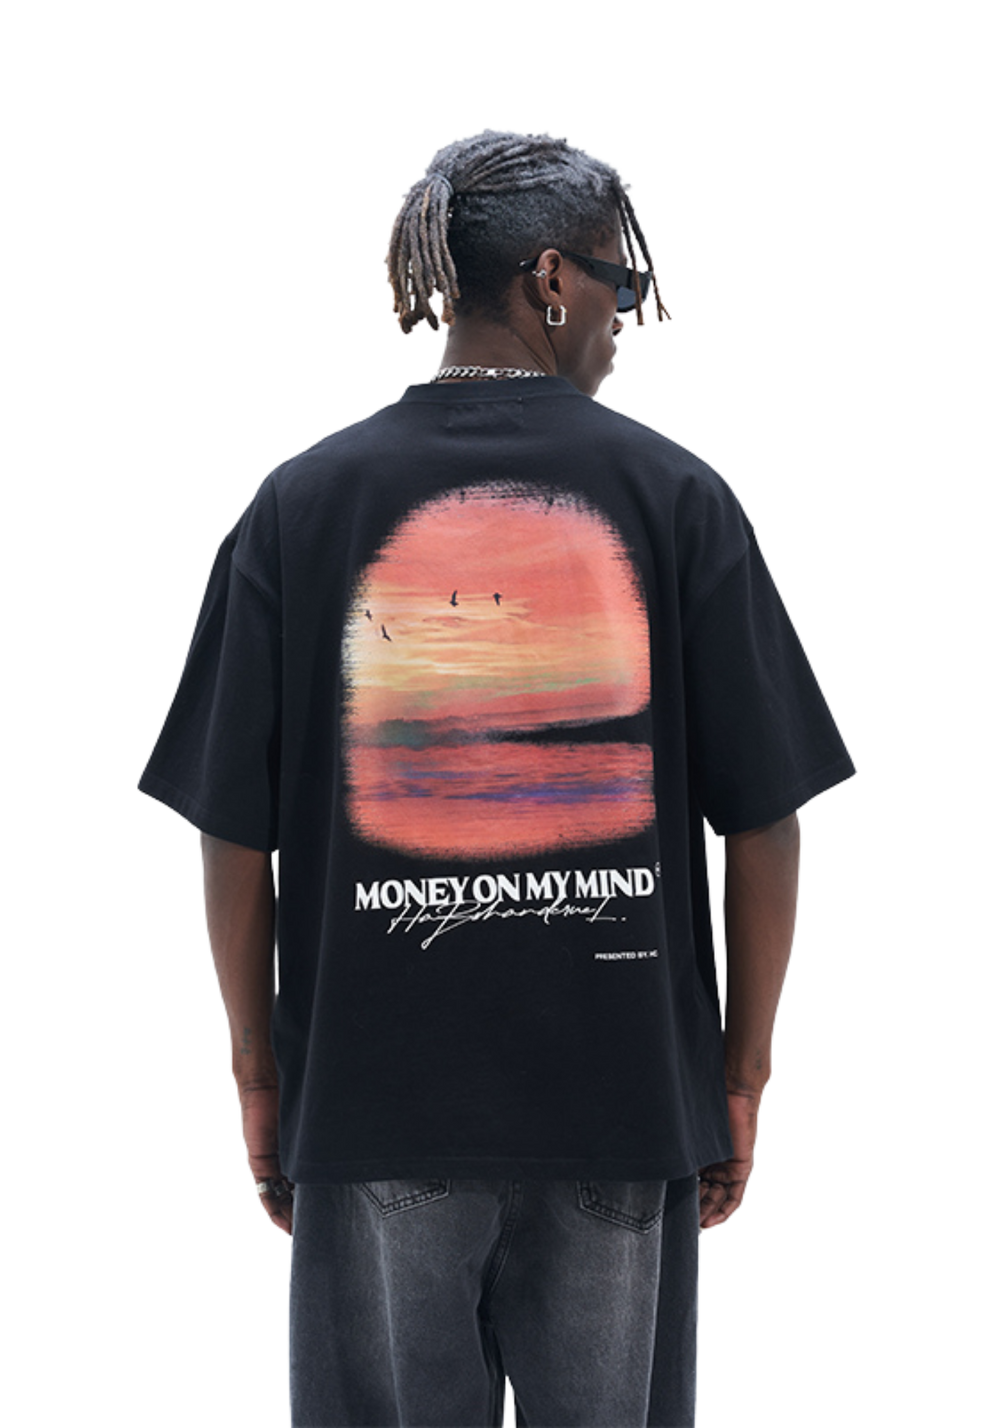 Harsh and Cruel - Sunset Oil Painting Printed Shirt - Black - PSYLOS1